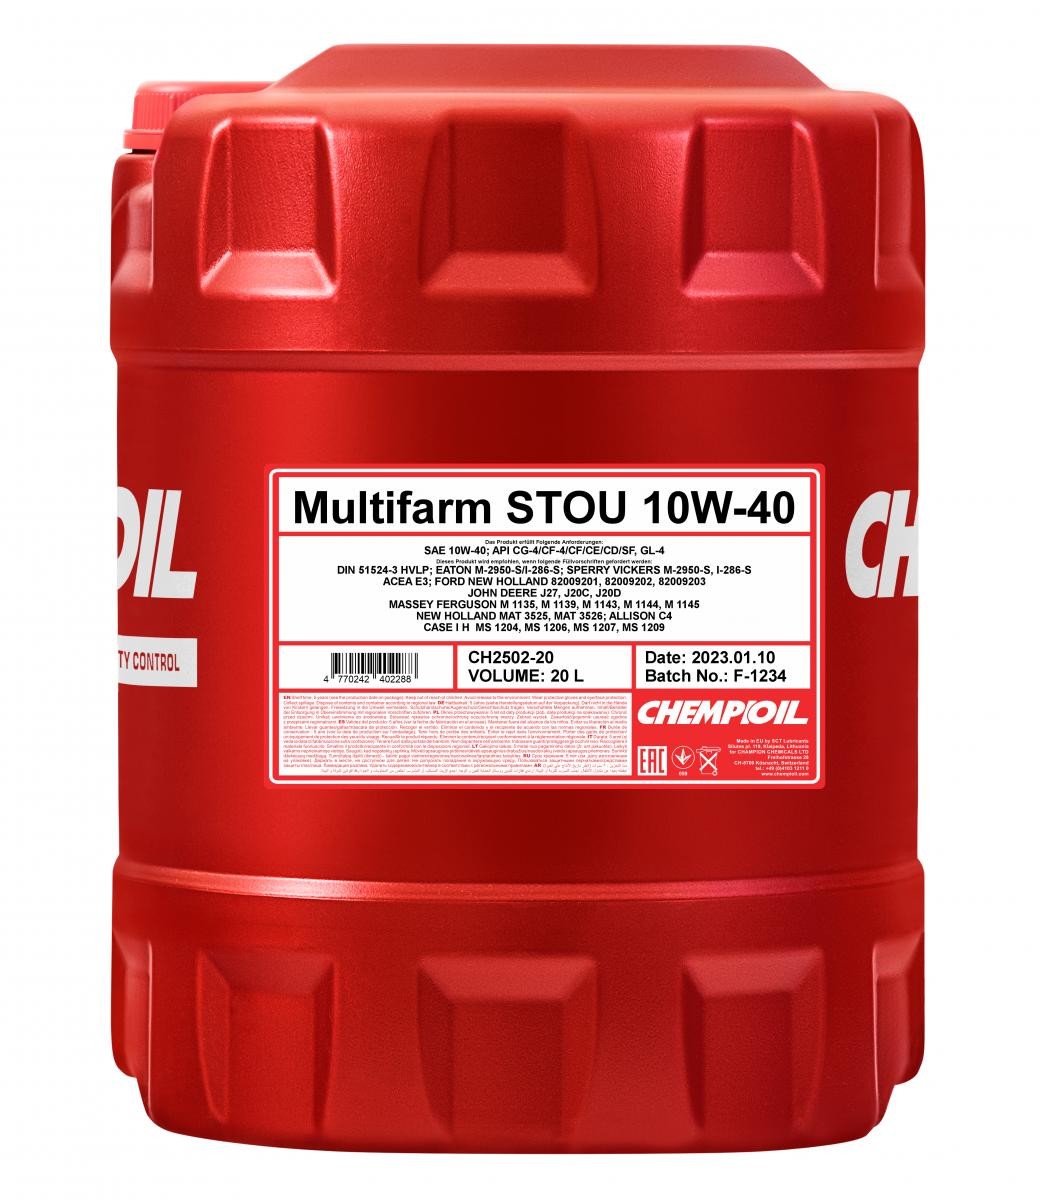 Engine oil MAT 3525 CHEMPIOIL - CH2502-20 Multifarm, STOU